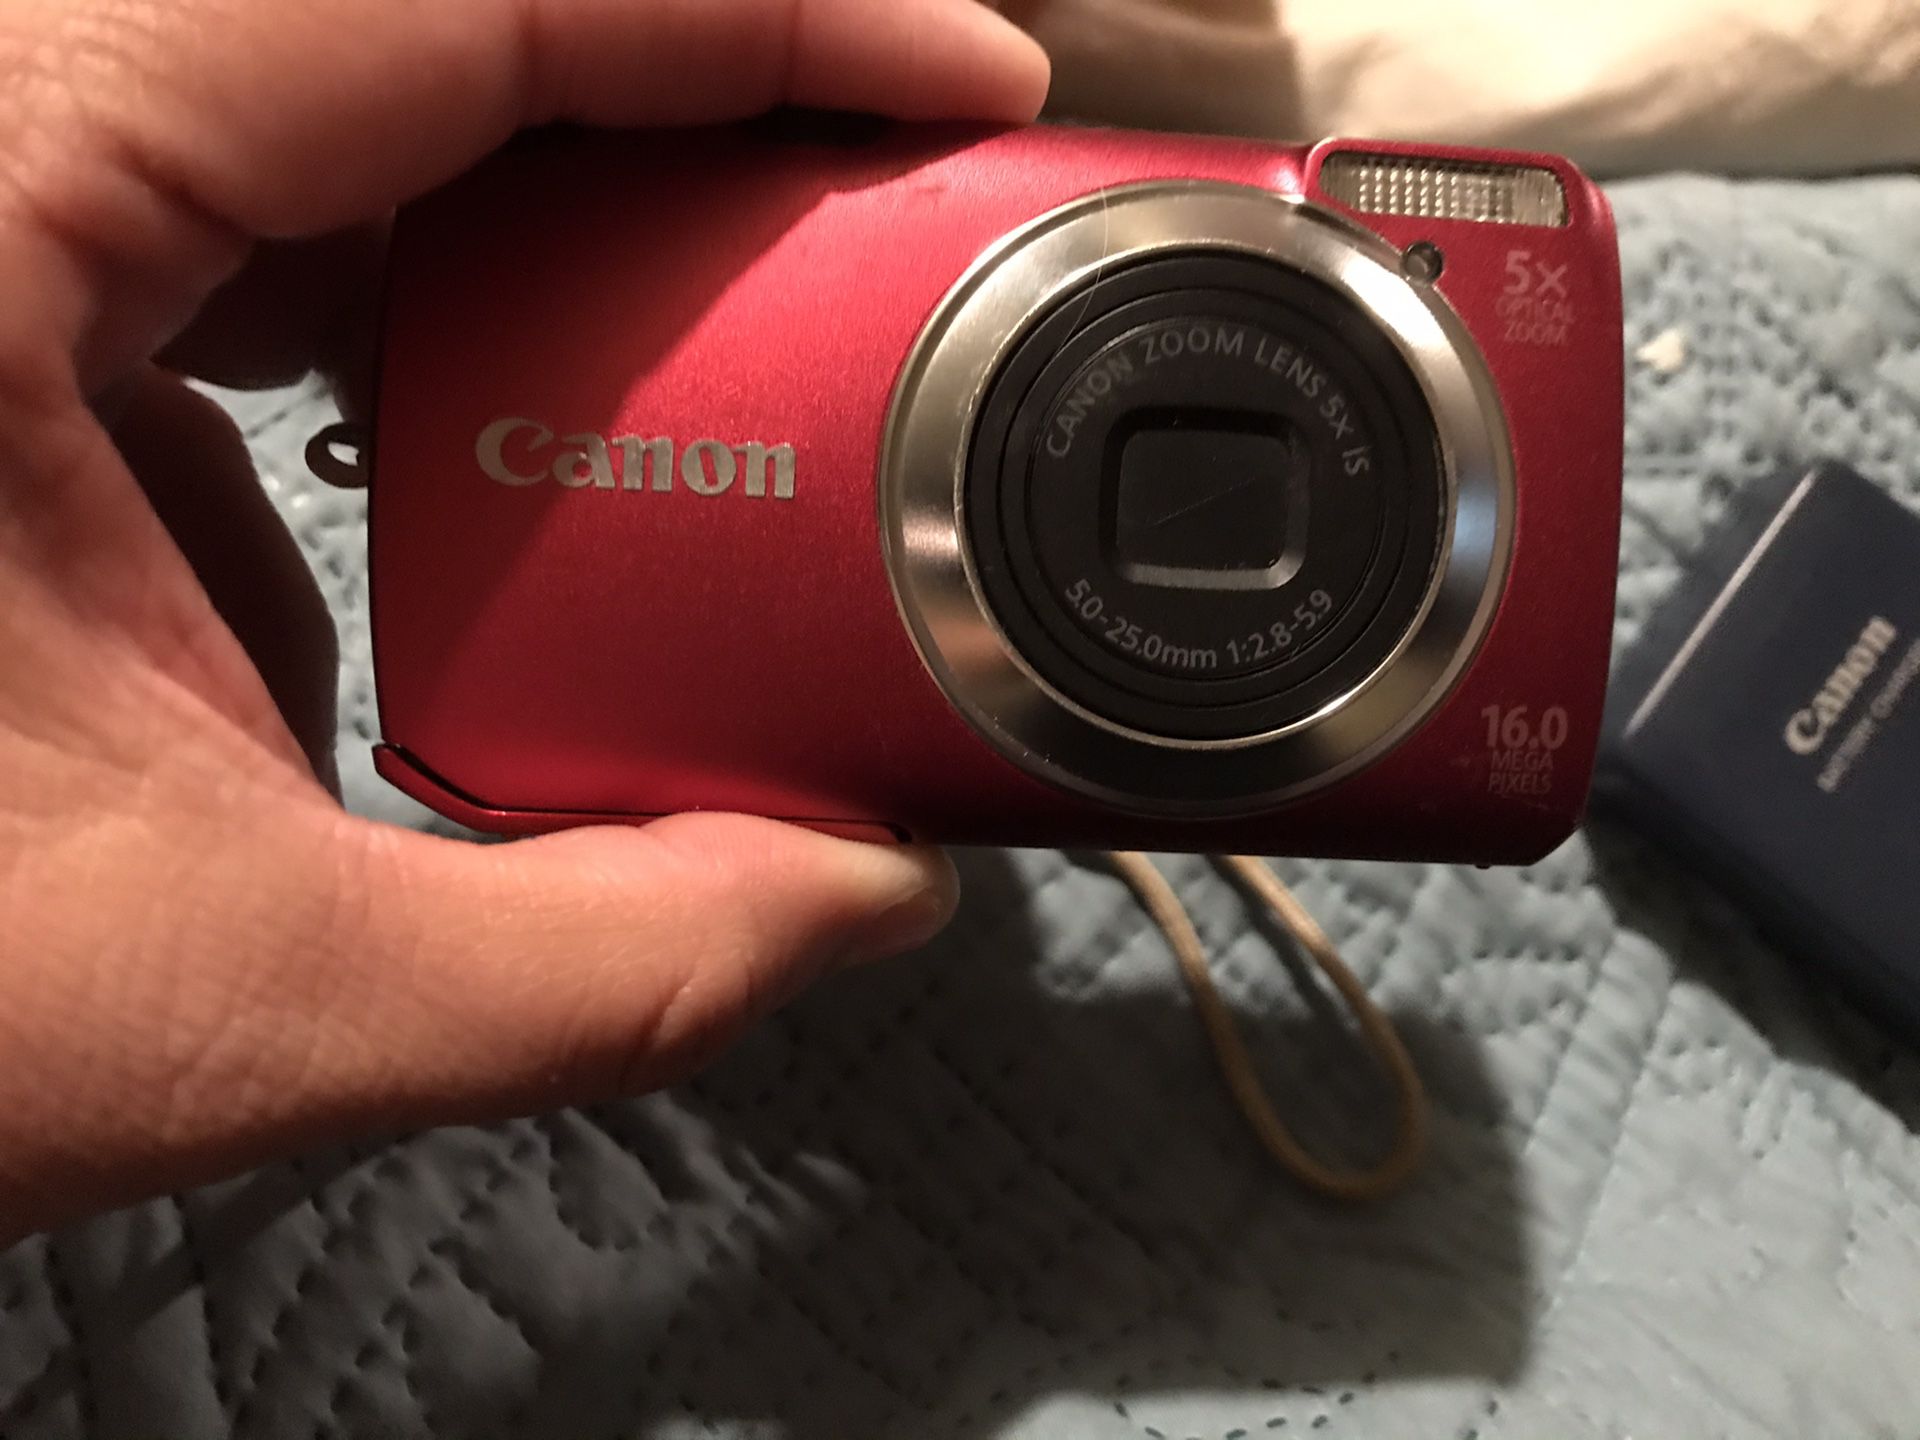 Canon digital camera 16.0 mega pixels 5X optical zoom charger included